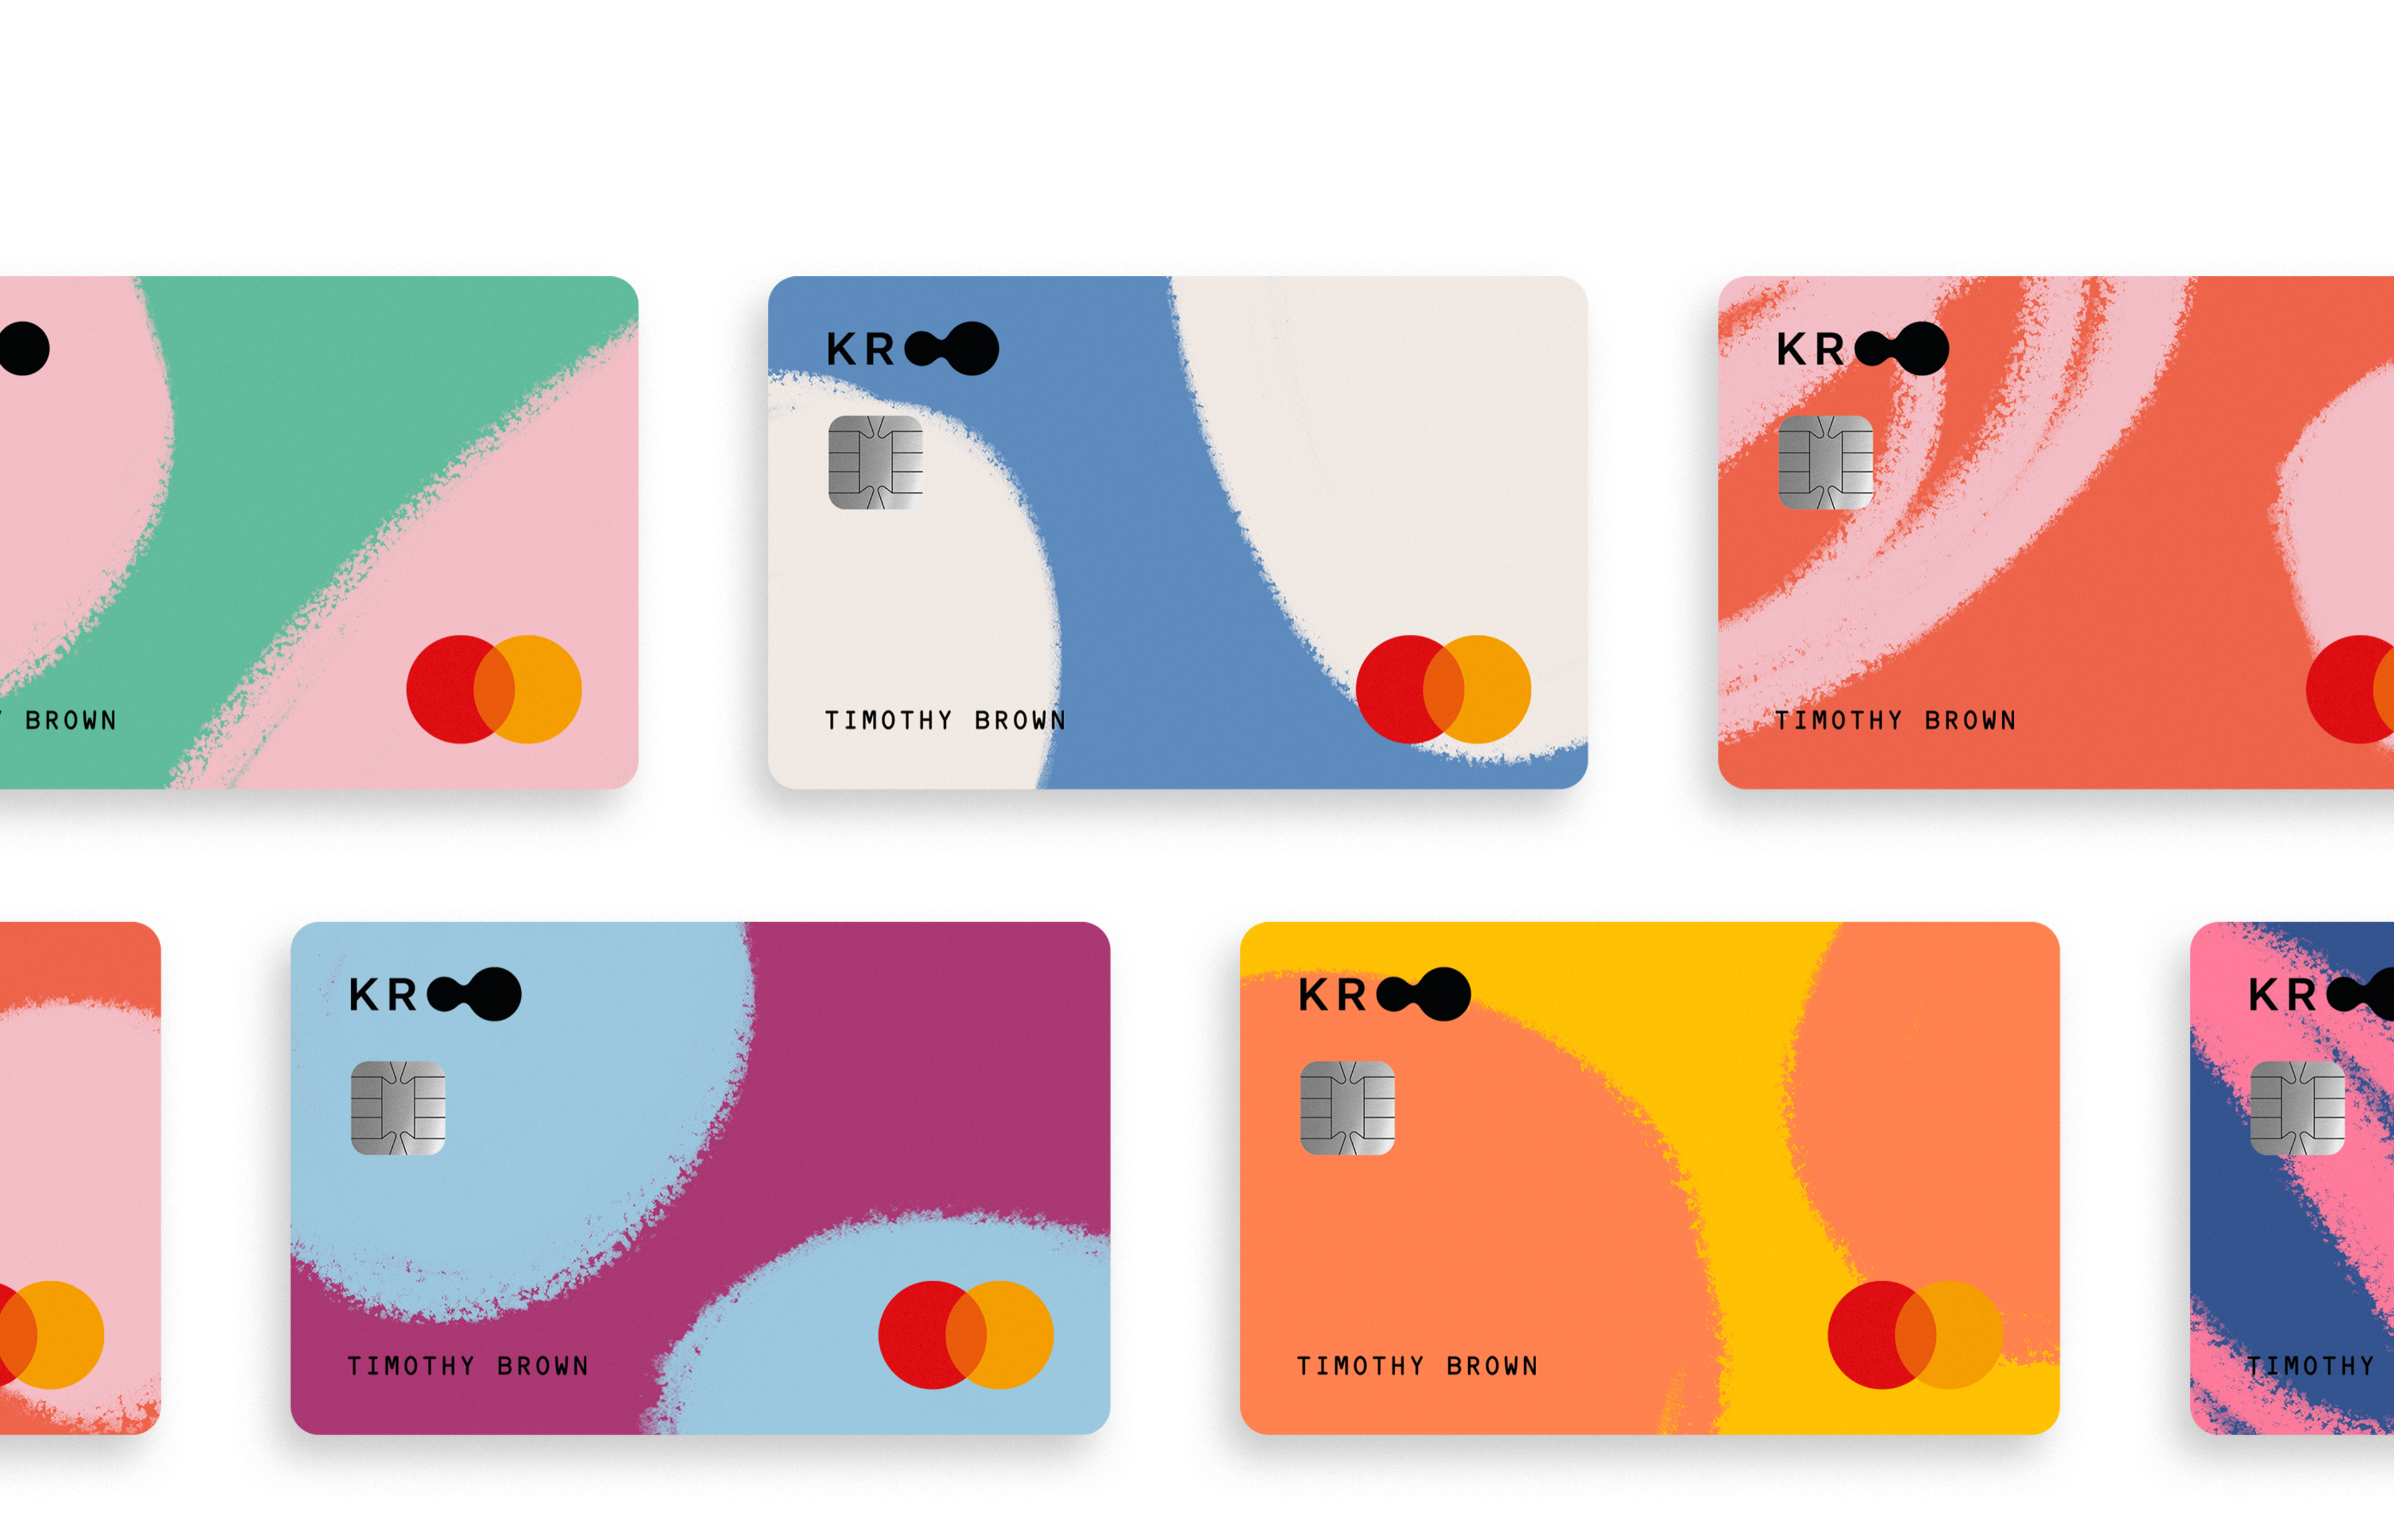 Kroo Bank Card Design